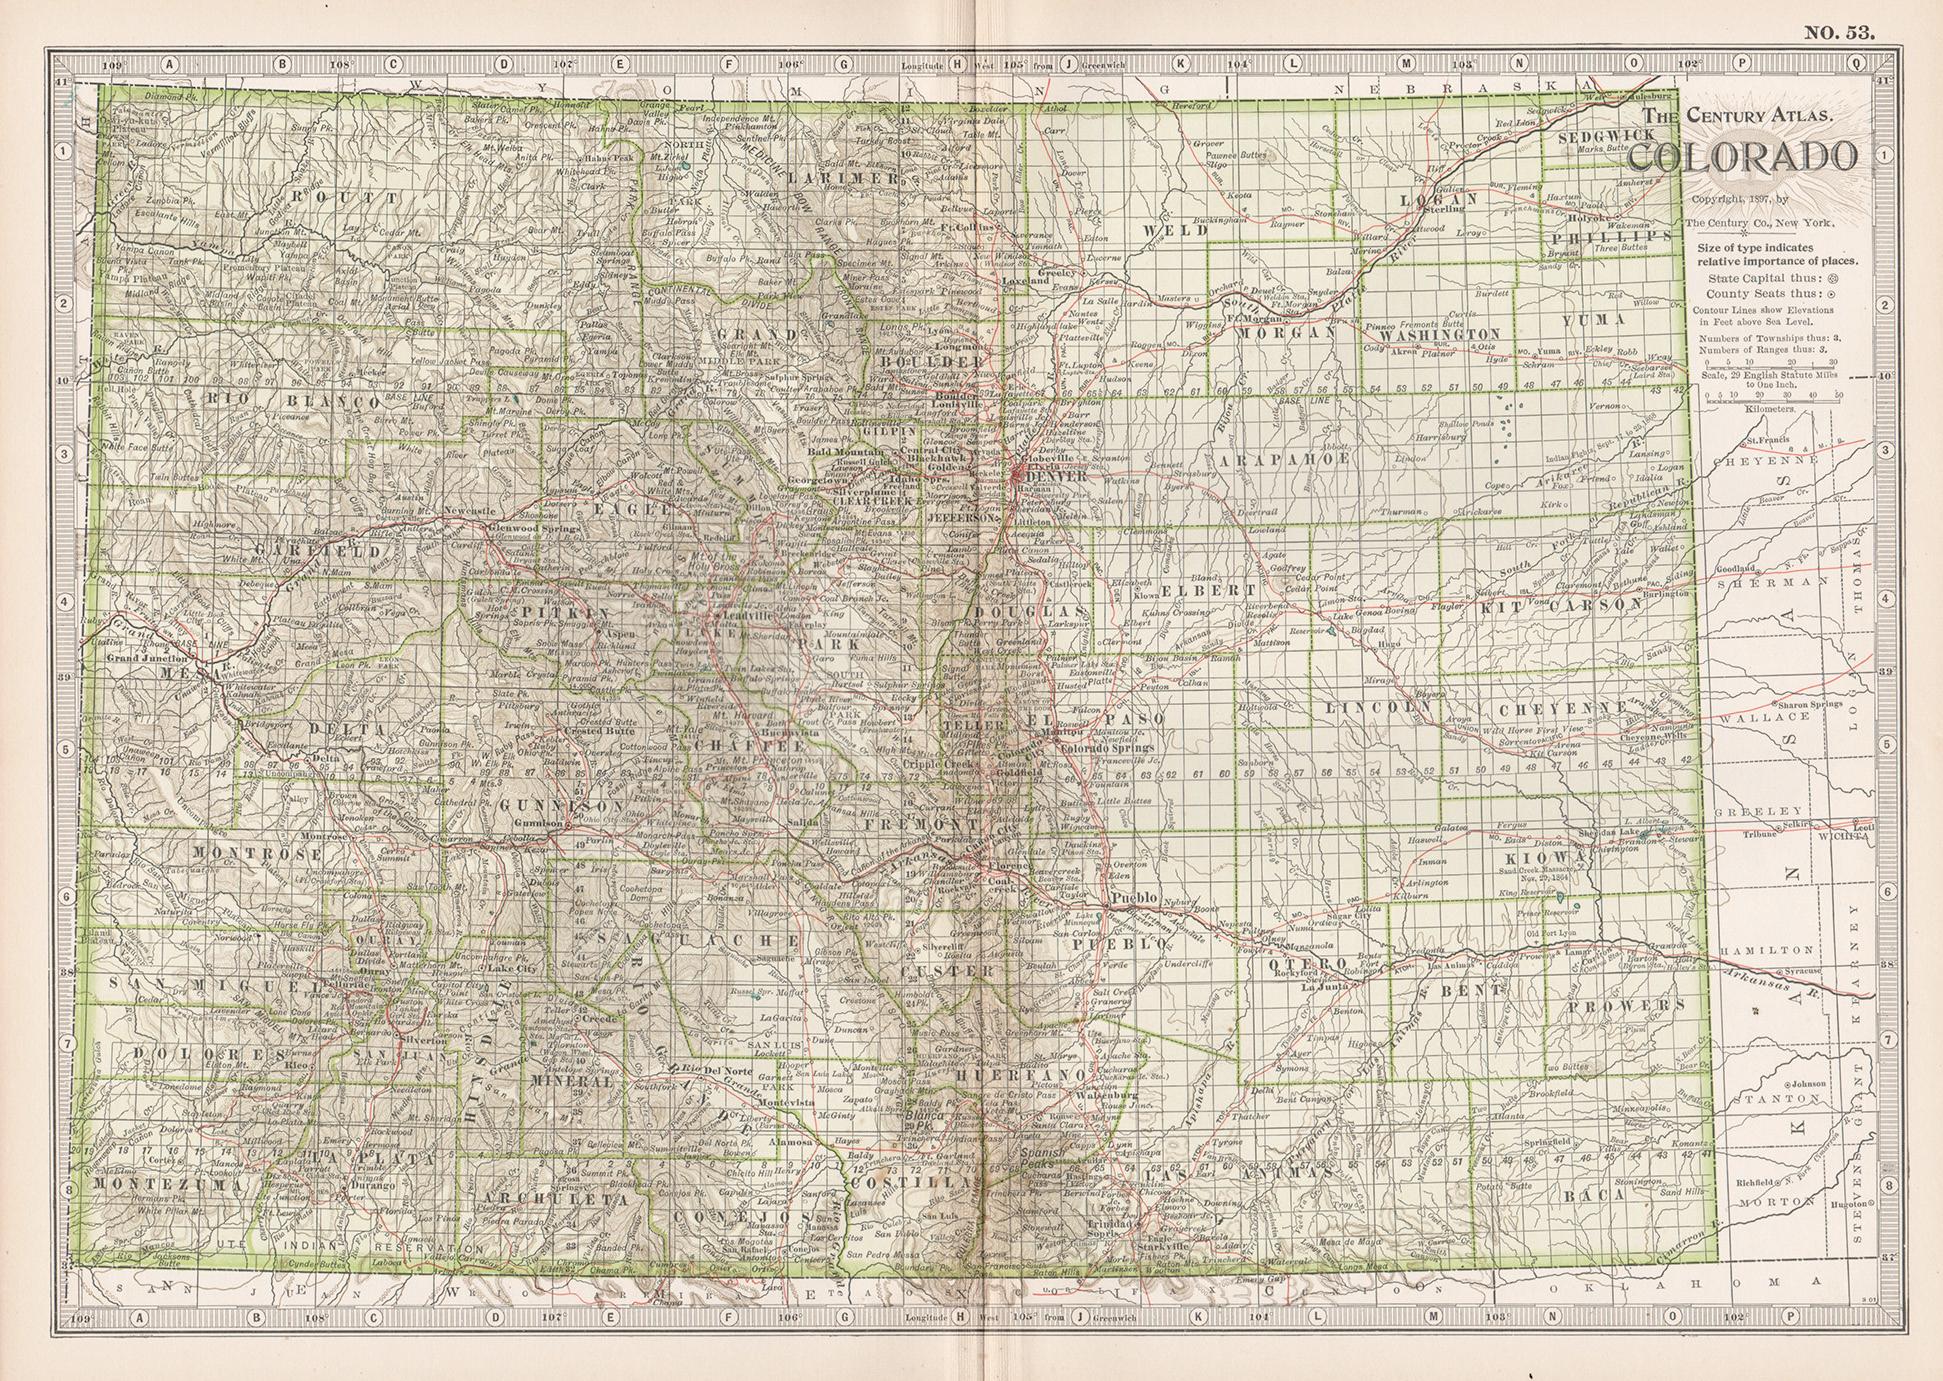 Unknown Print - Colorado. USA. Century Atlas state antique vintage map